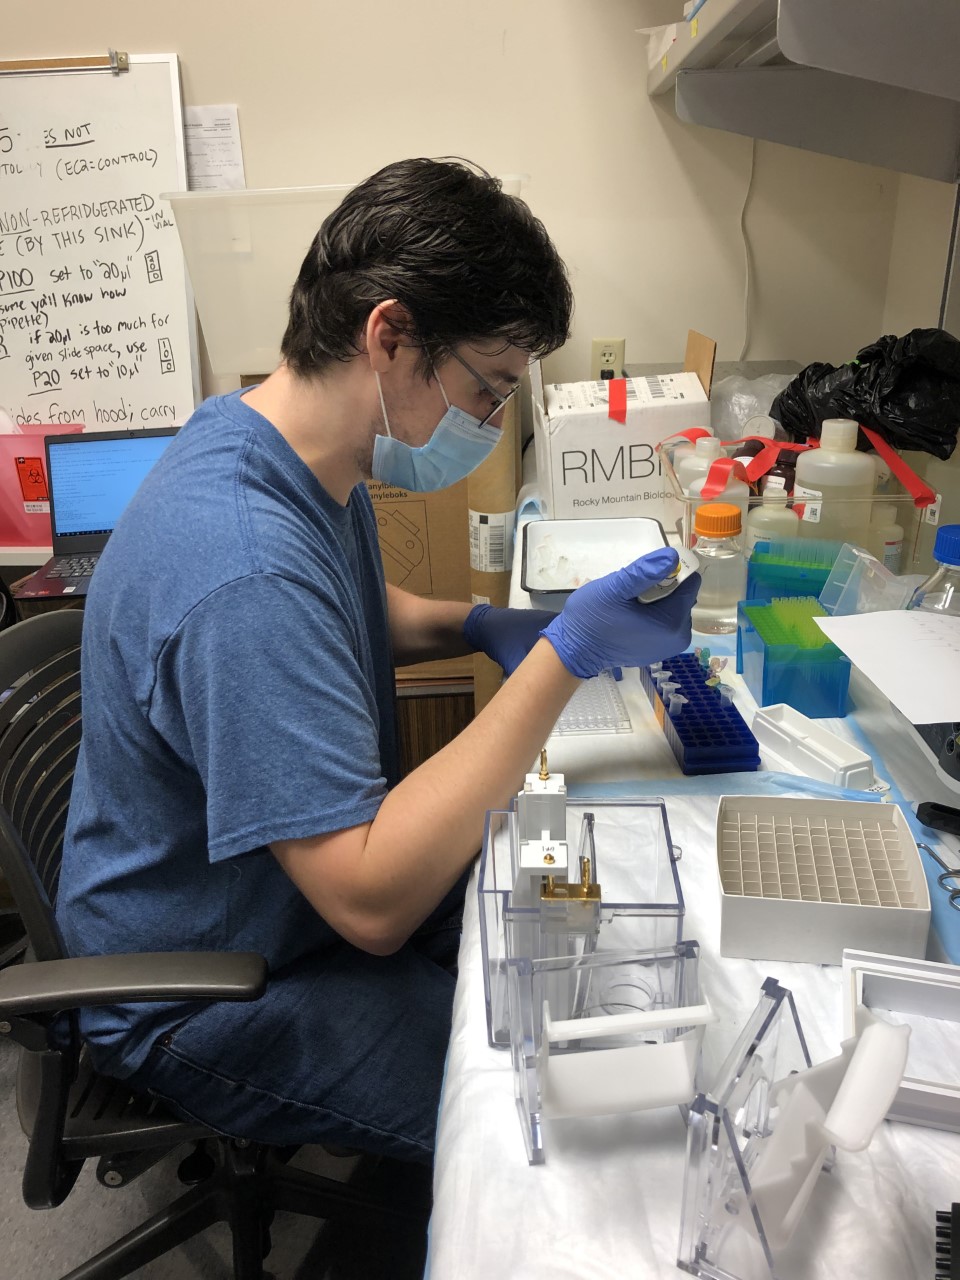 WWU graduate student Brennen Risch working at a lab desk